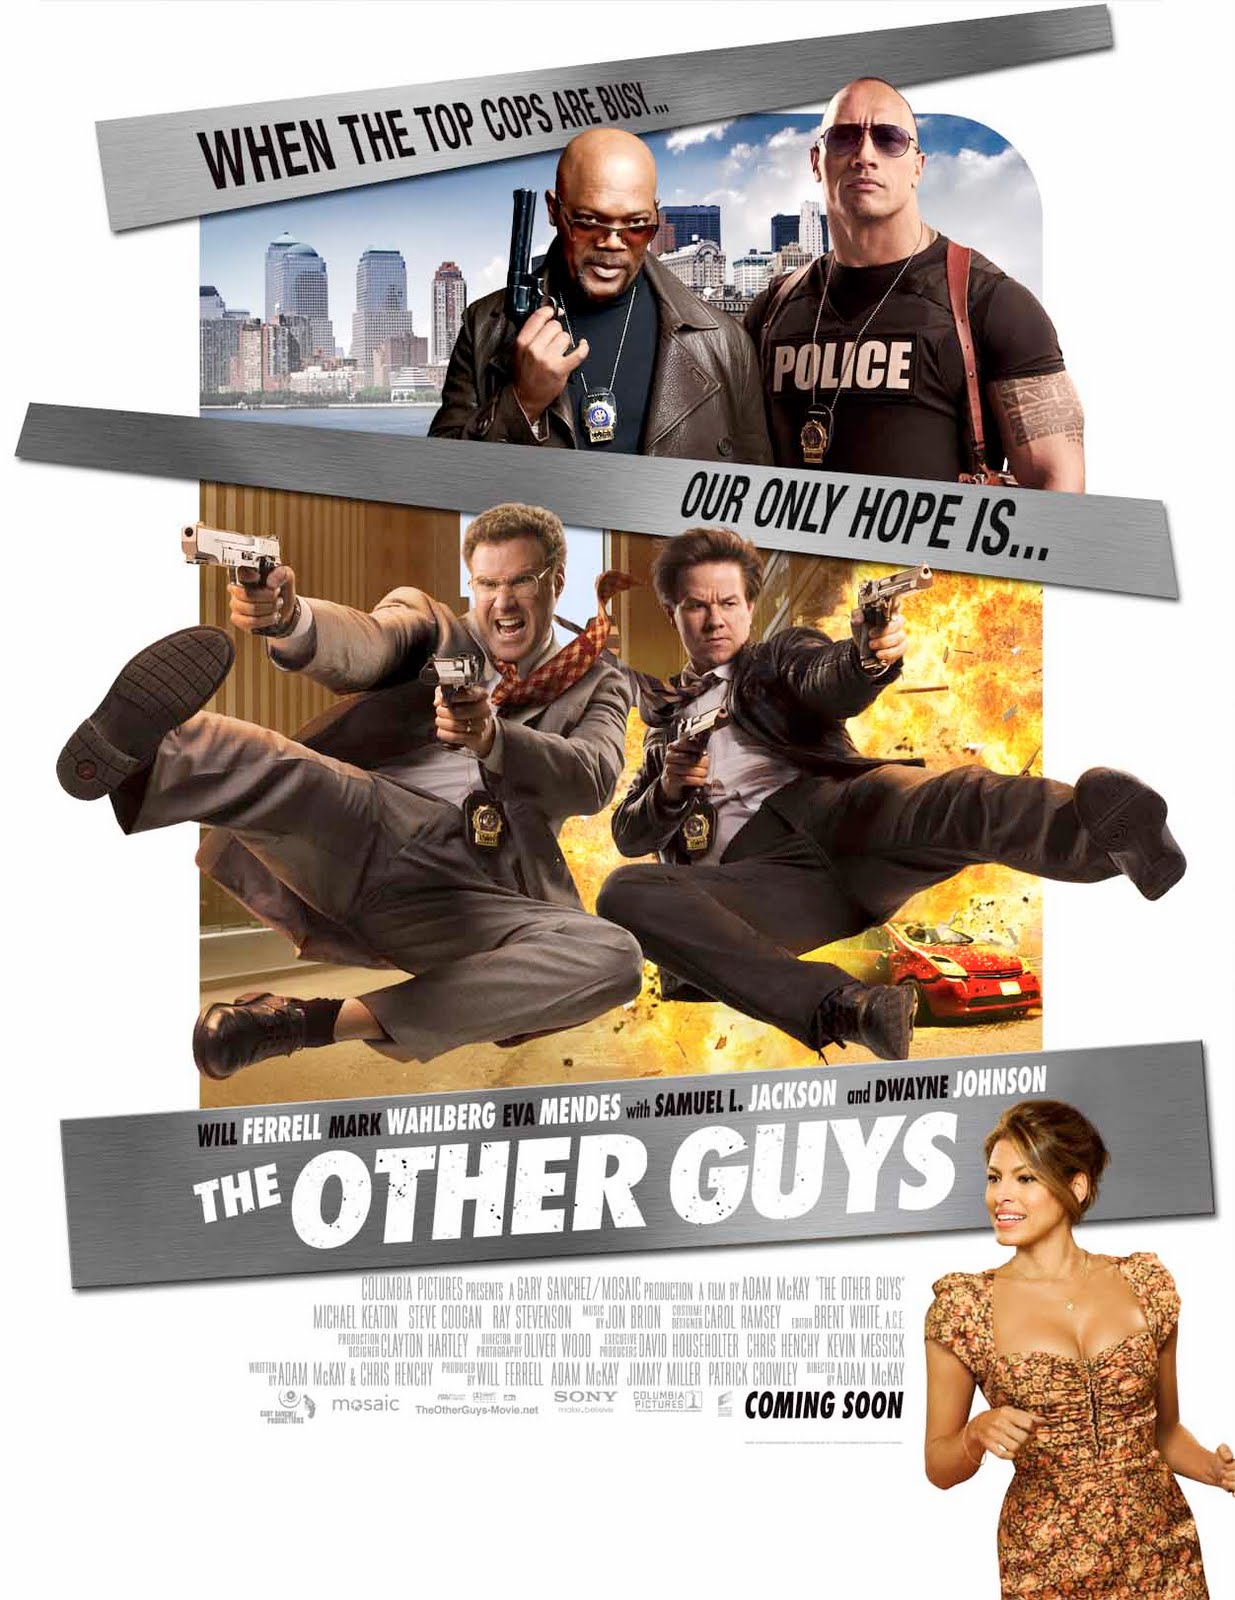 http://4.bp.blogspot.com/-Yakkw3sQIes/TlcorZ39CzI/AAAAAAAACY4/-bMQXGth5uA/s1600/the-other-guys-movie-poster.jpg